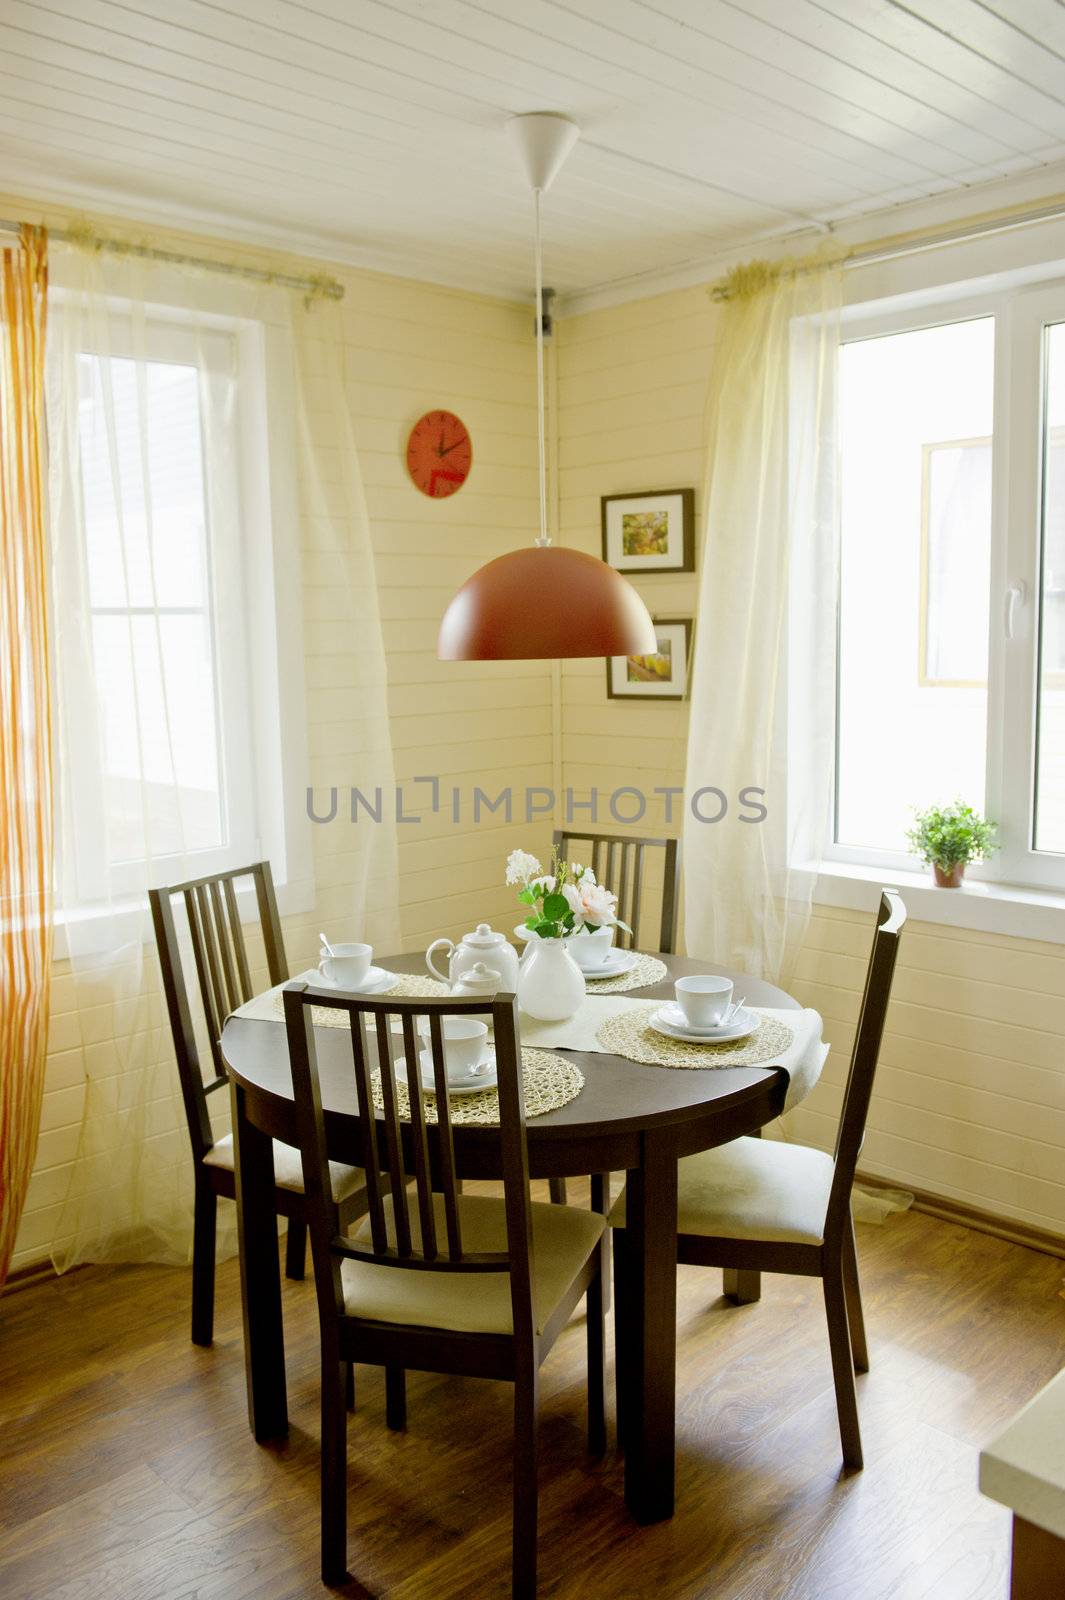 Privat house interior. Traditional Scandinavian interior.